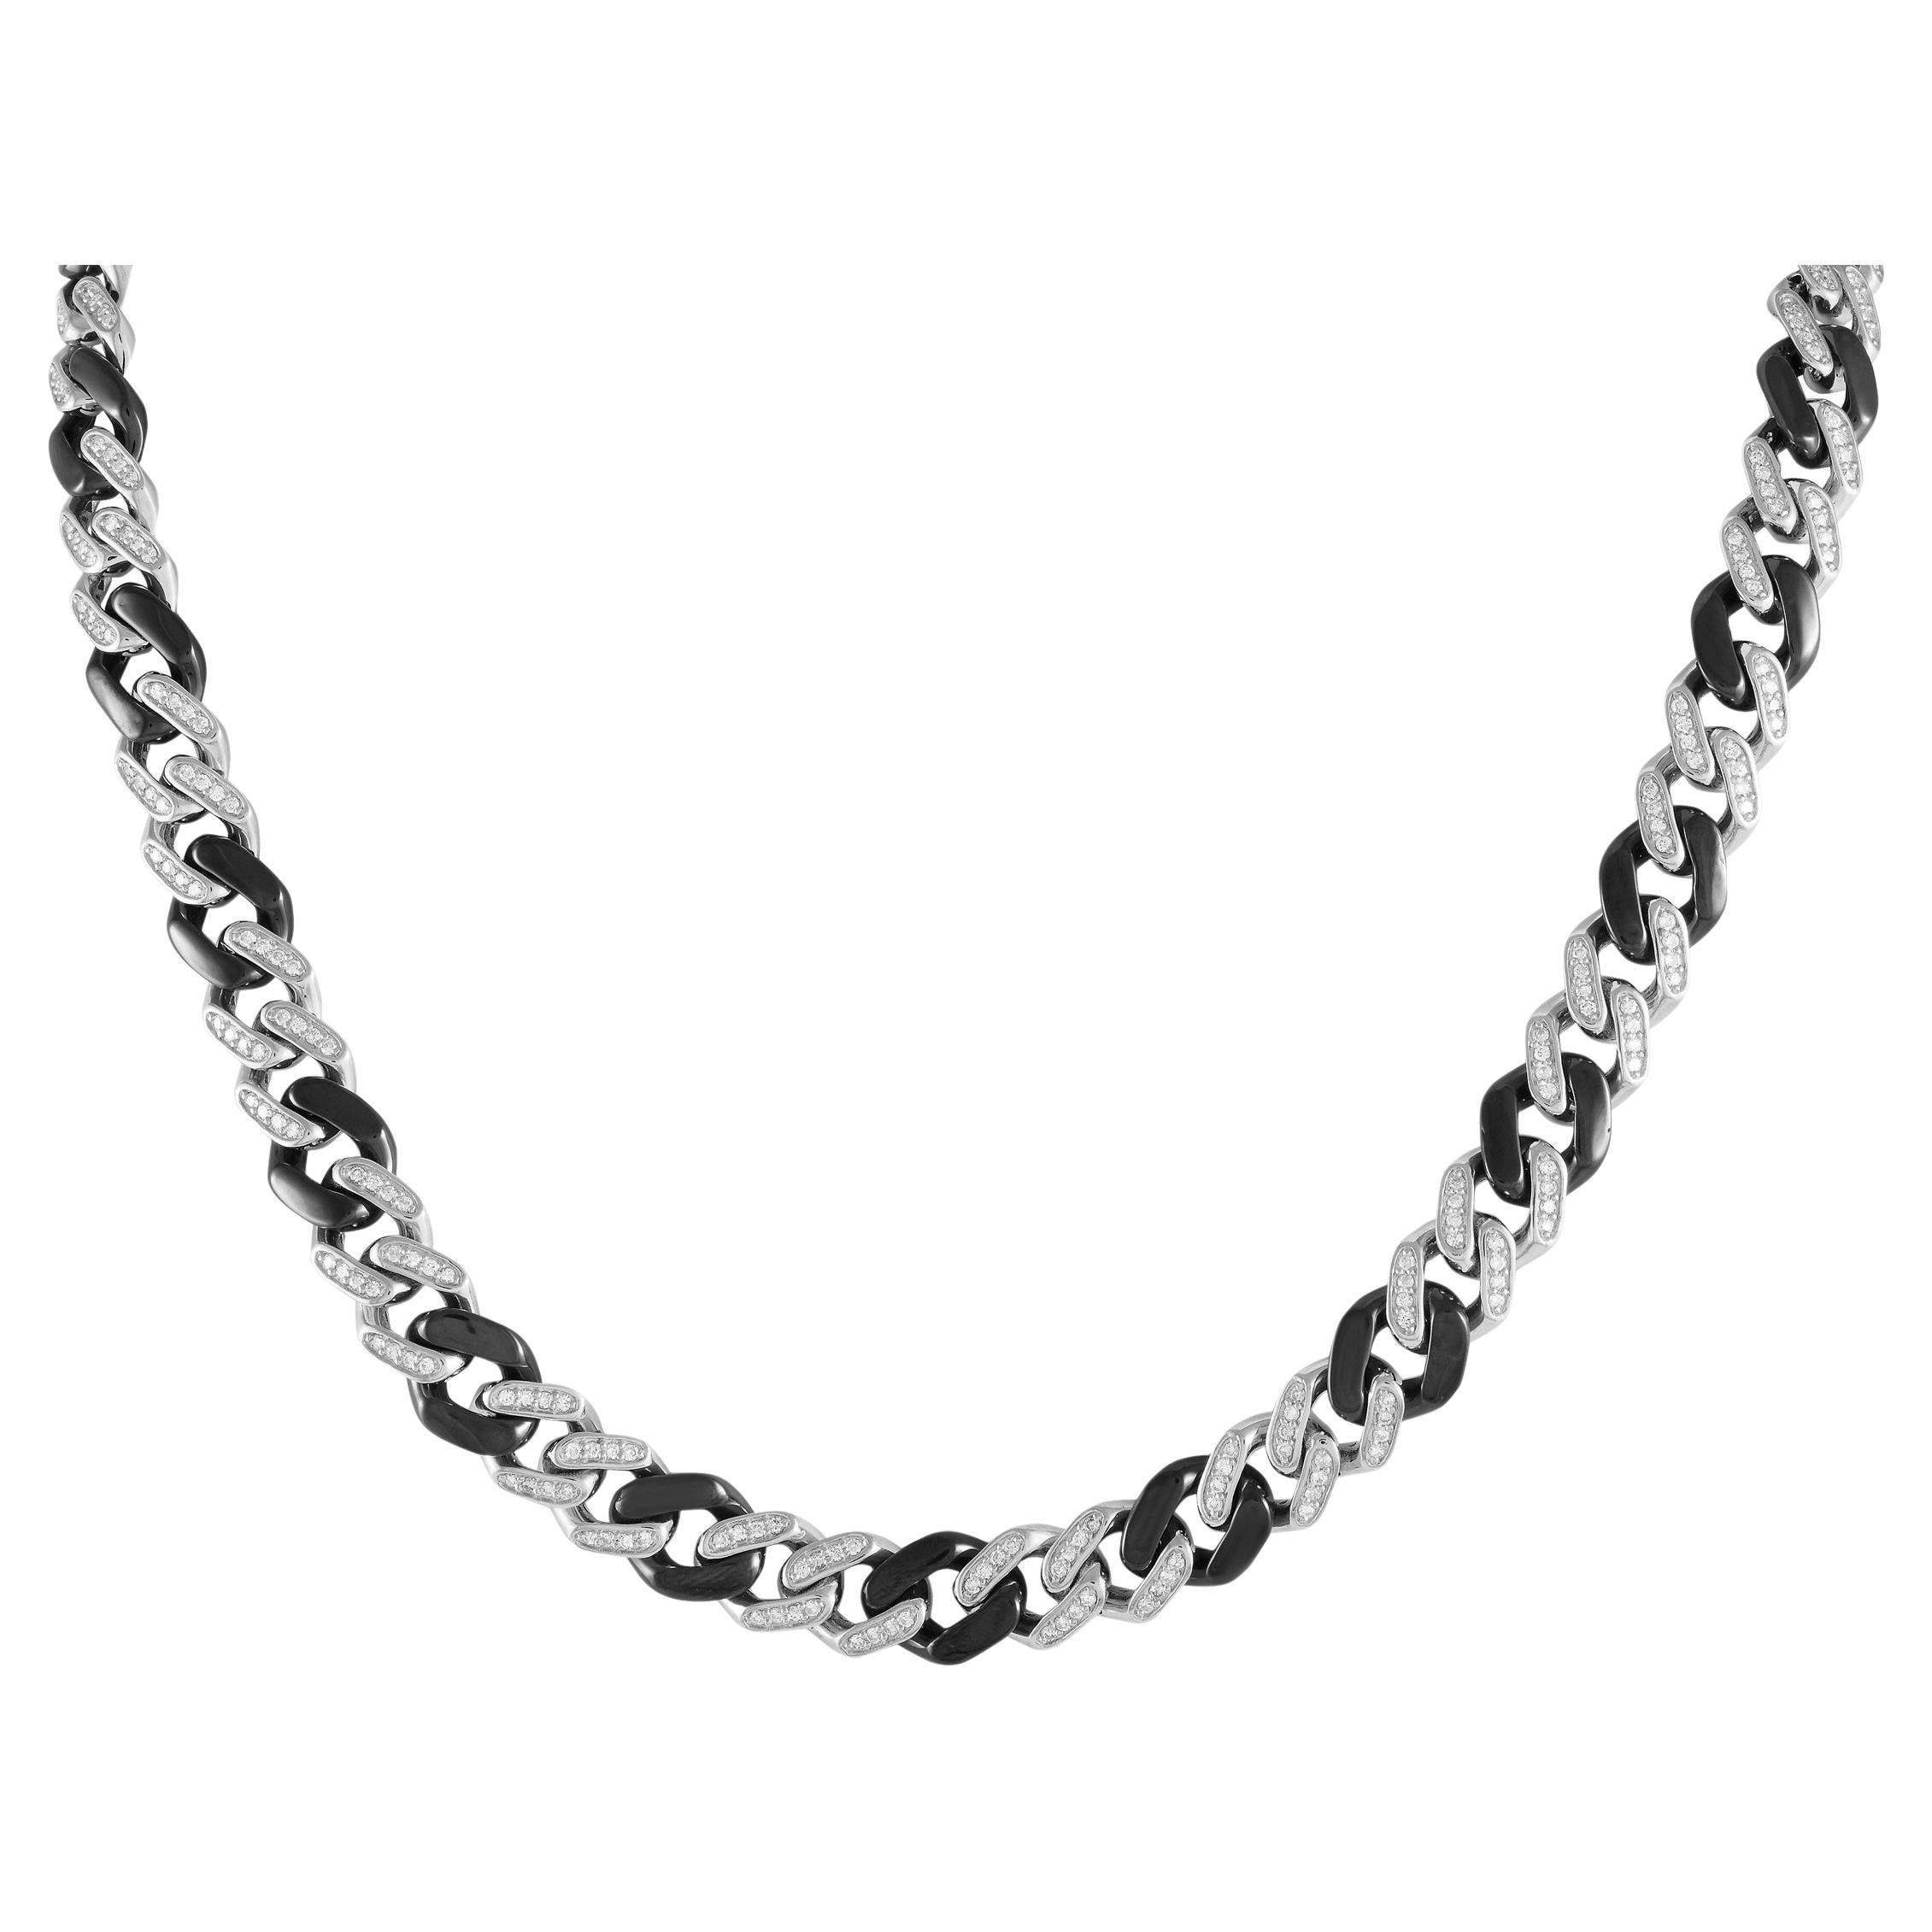 LB Exclusive 18K White Gold 2.75ct Diamond Black Curb Chain Necklace For Sale